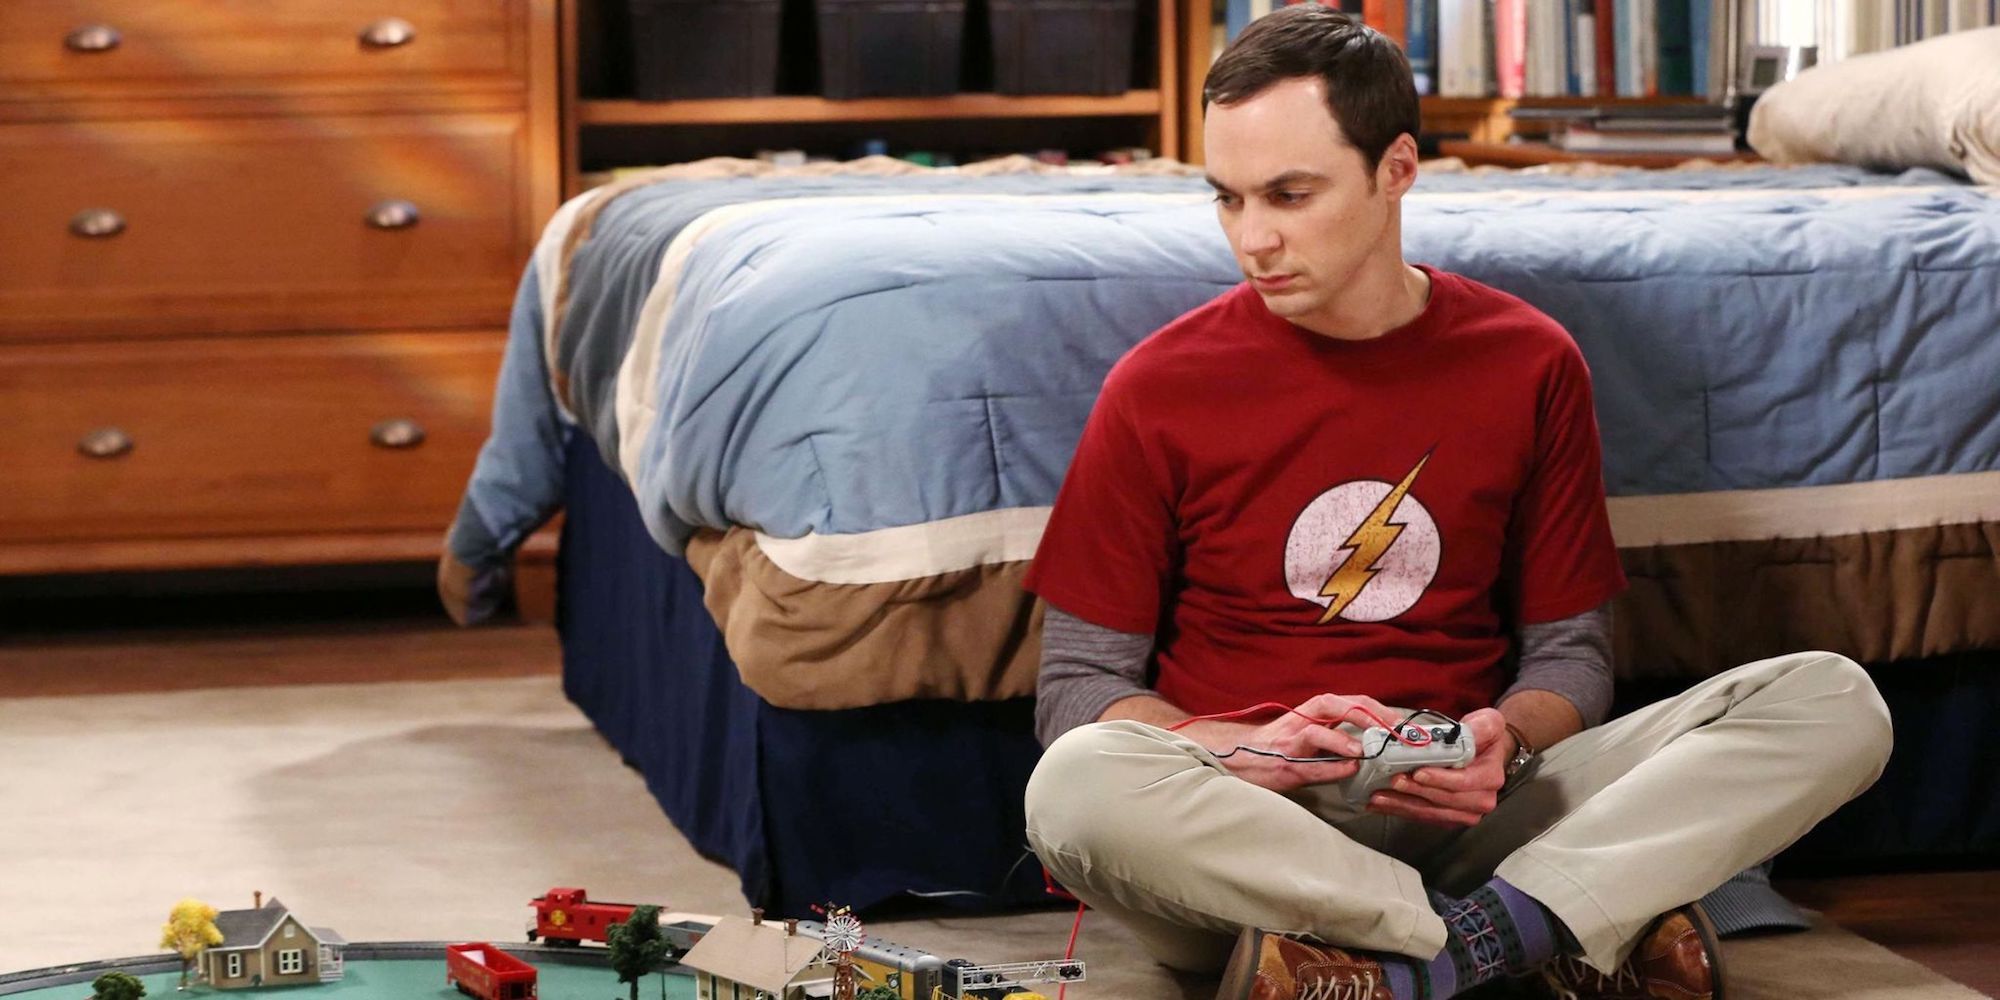 Jim Parsons as Sheldon Cooper Wearing The Flash Shirt in The Big Bang Theory